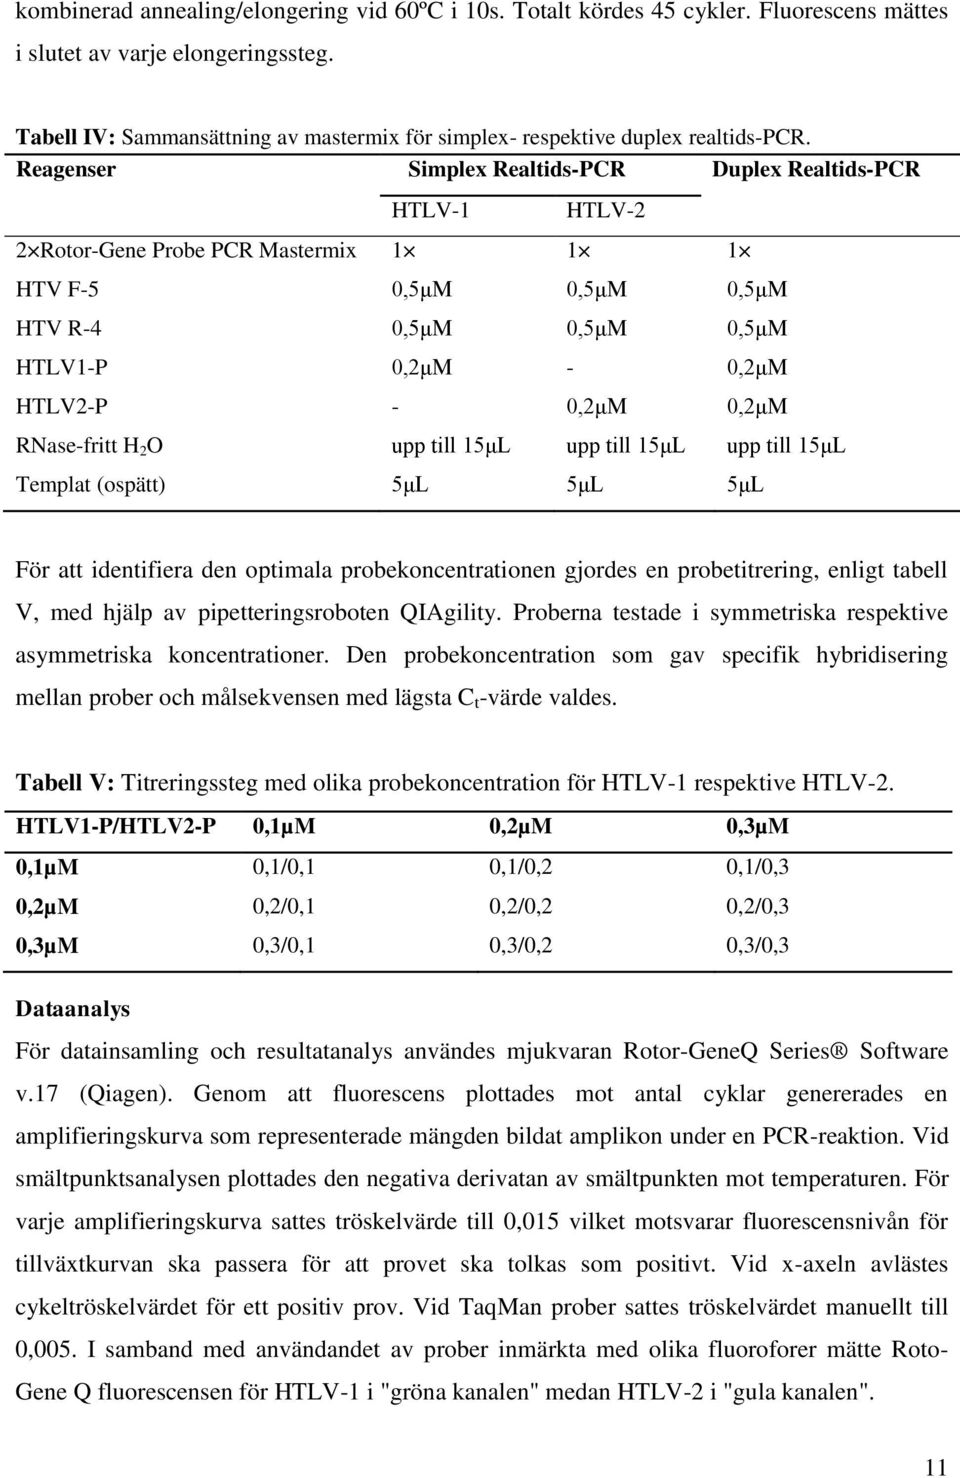 Reagenser Simplex Realtids-PCR Duplex Realtids-PCR HTLV-1 HTLV-2 2 Rotor-Gene Probe PCR Mastermix 1 1 1 HTV F-5 0,5μM 0,5μM 0,5μM HTV R-4 0,5μM 0,5μM 0,5μM HTLV1-P 0,2μM - 0,2μM HTLV2-P - 0,2μM 0,2μM